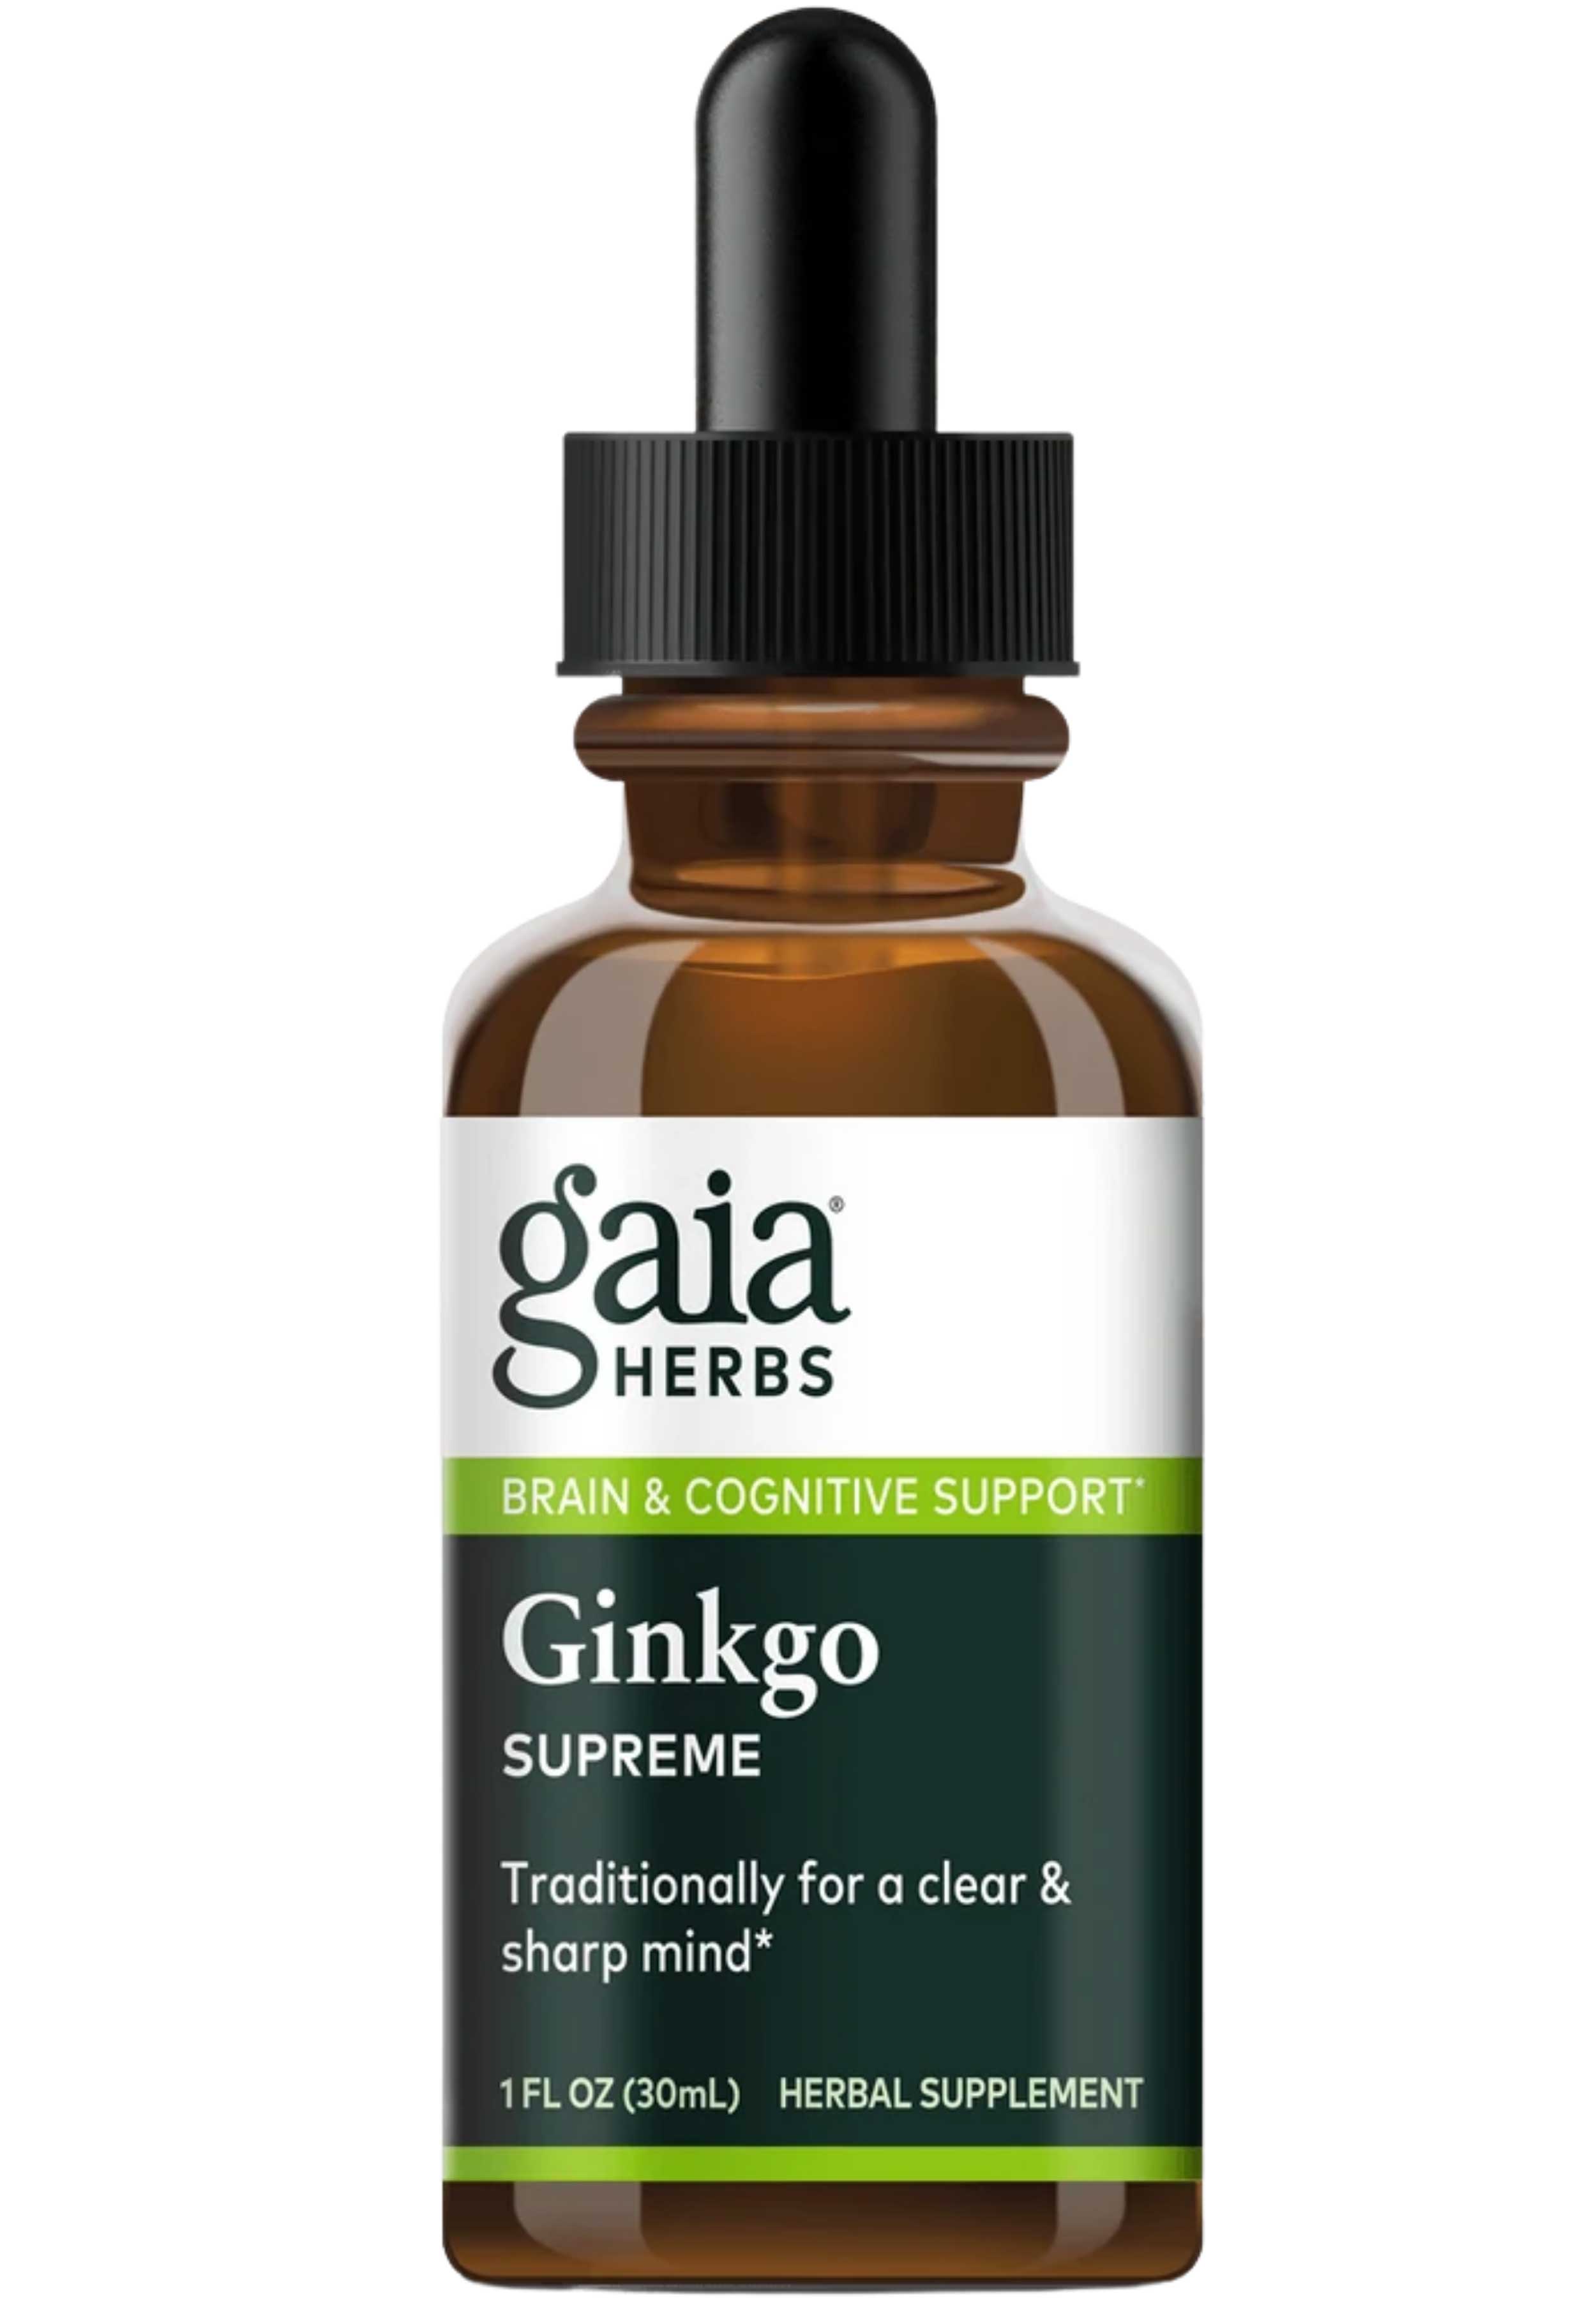 Gaia Herbs Ginkgo Supreme